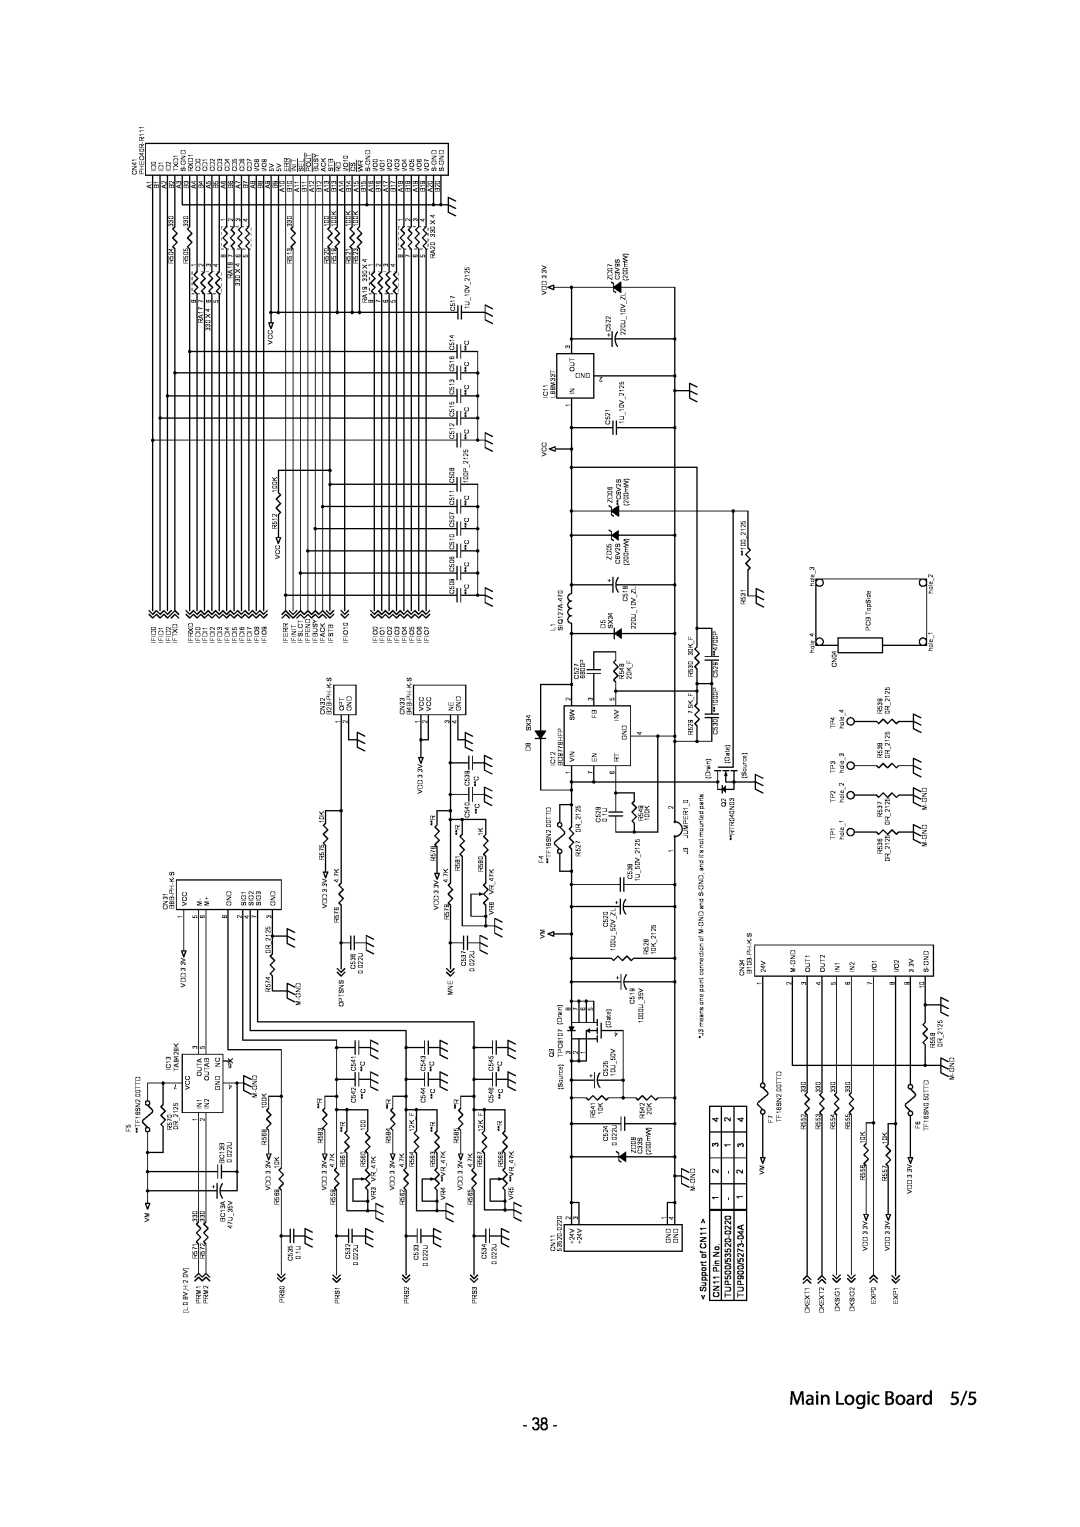 Star Micronics technical manual Main Logic Board 5/5, Support of CN11, CN11 Pin No, TUP500/53520-0220 